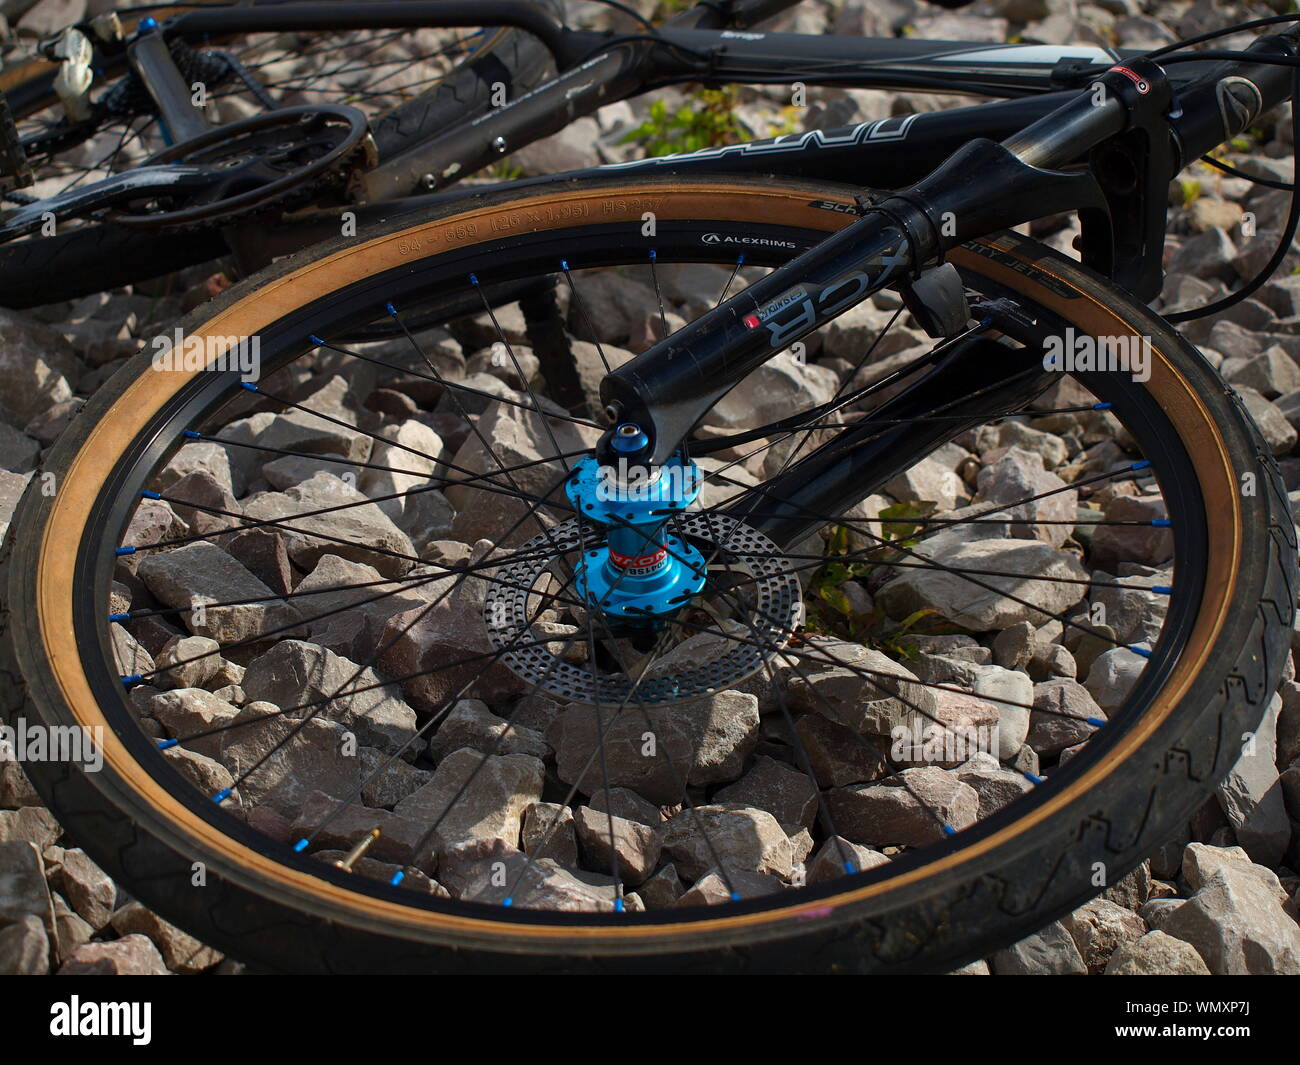 giant terrago mountain bike